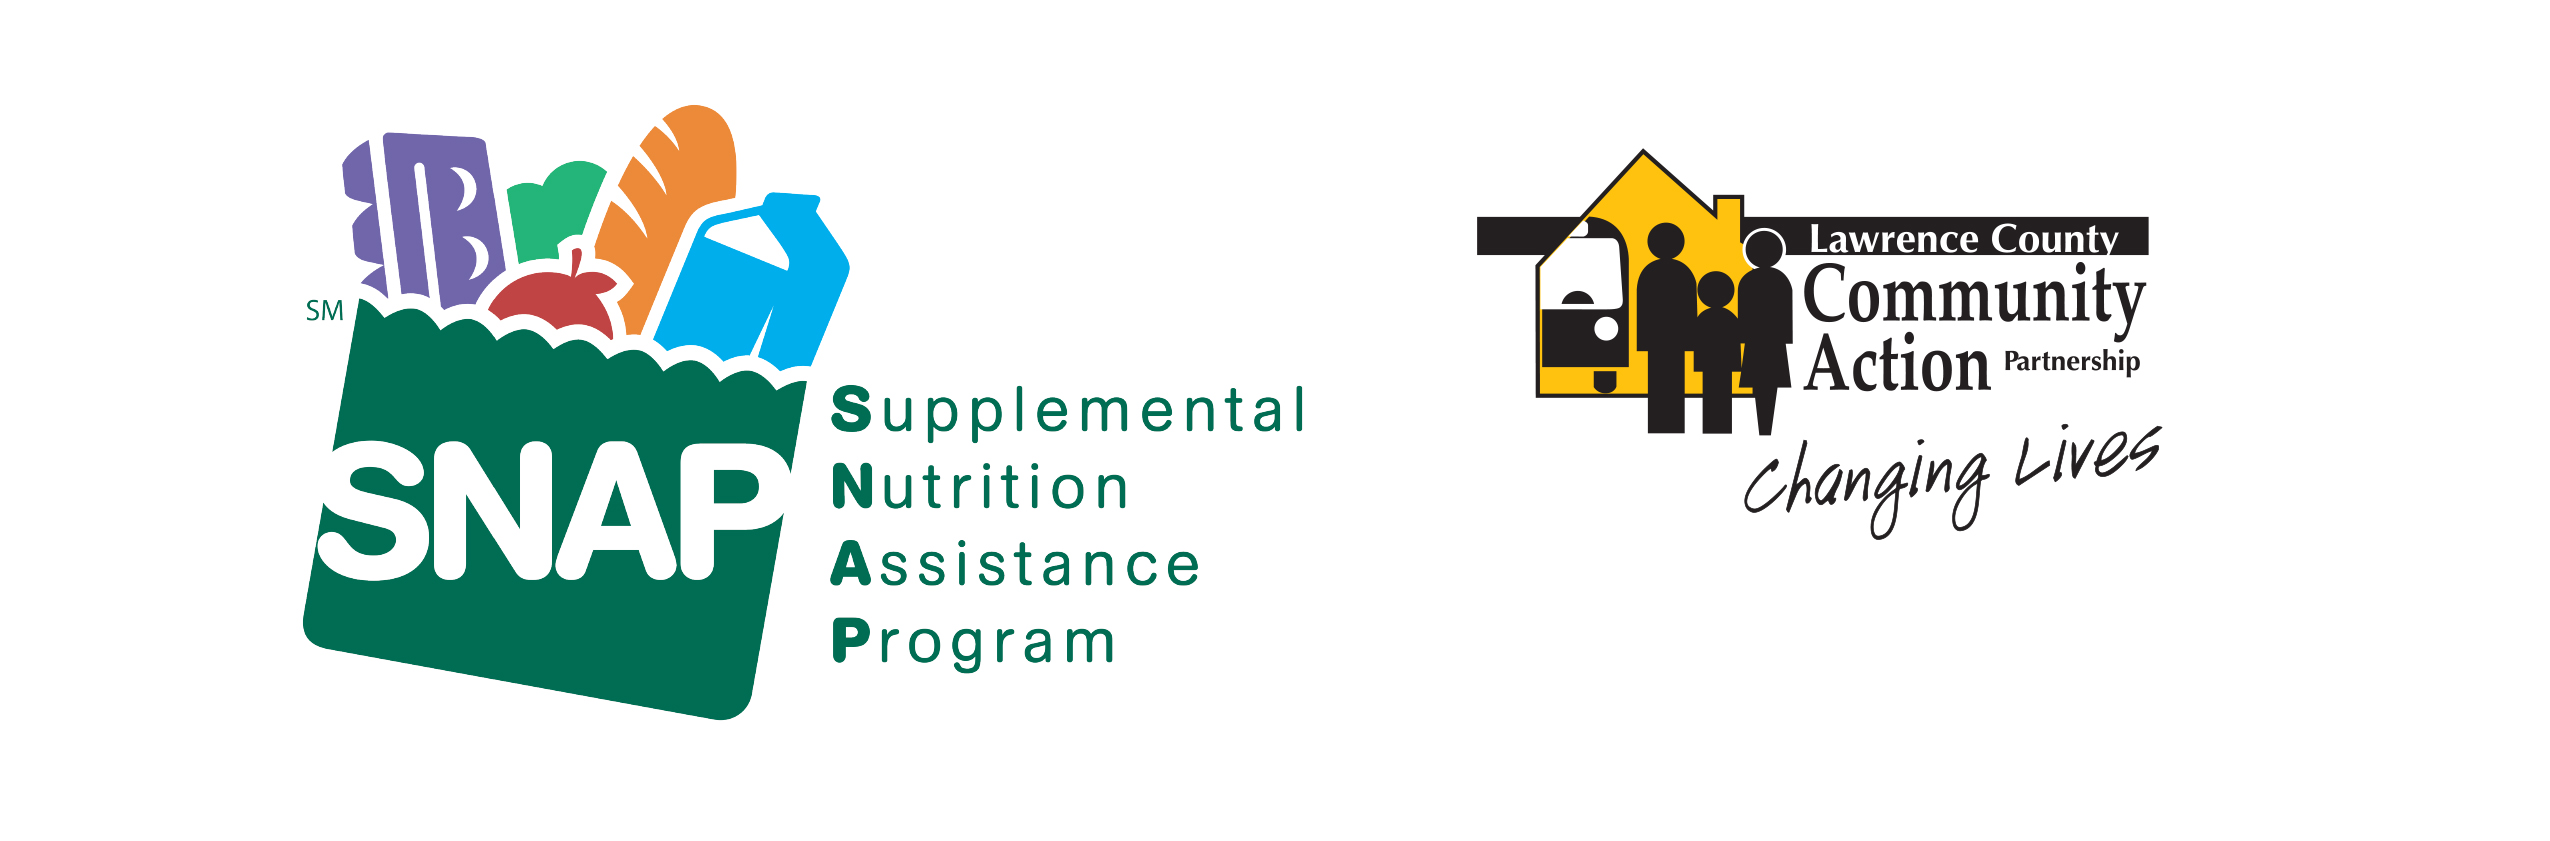 supplemental feeding program proposal